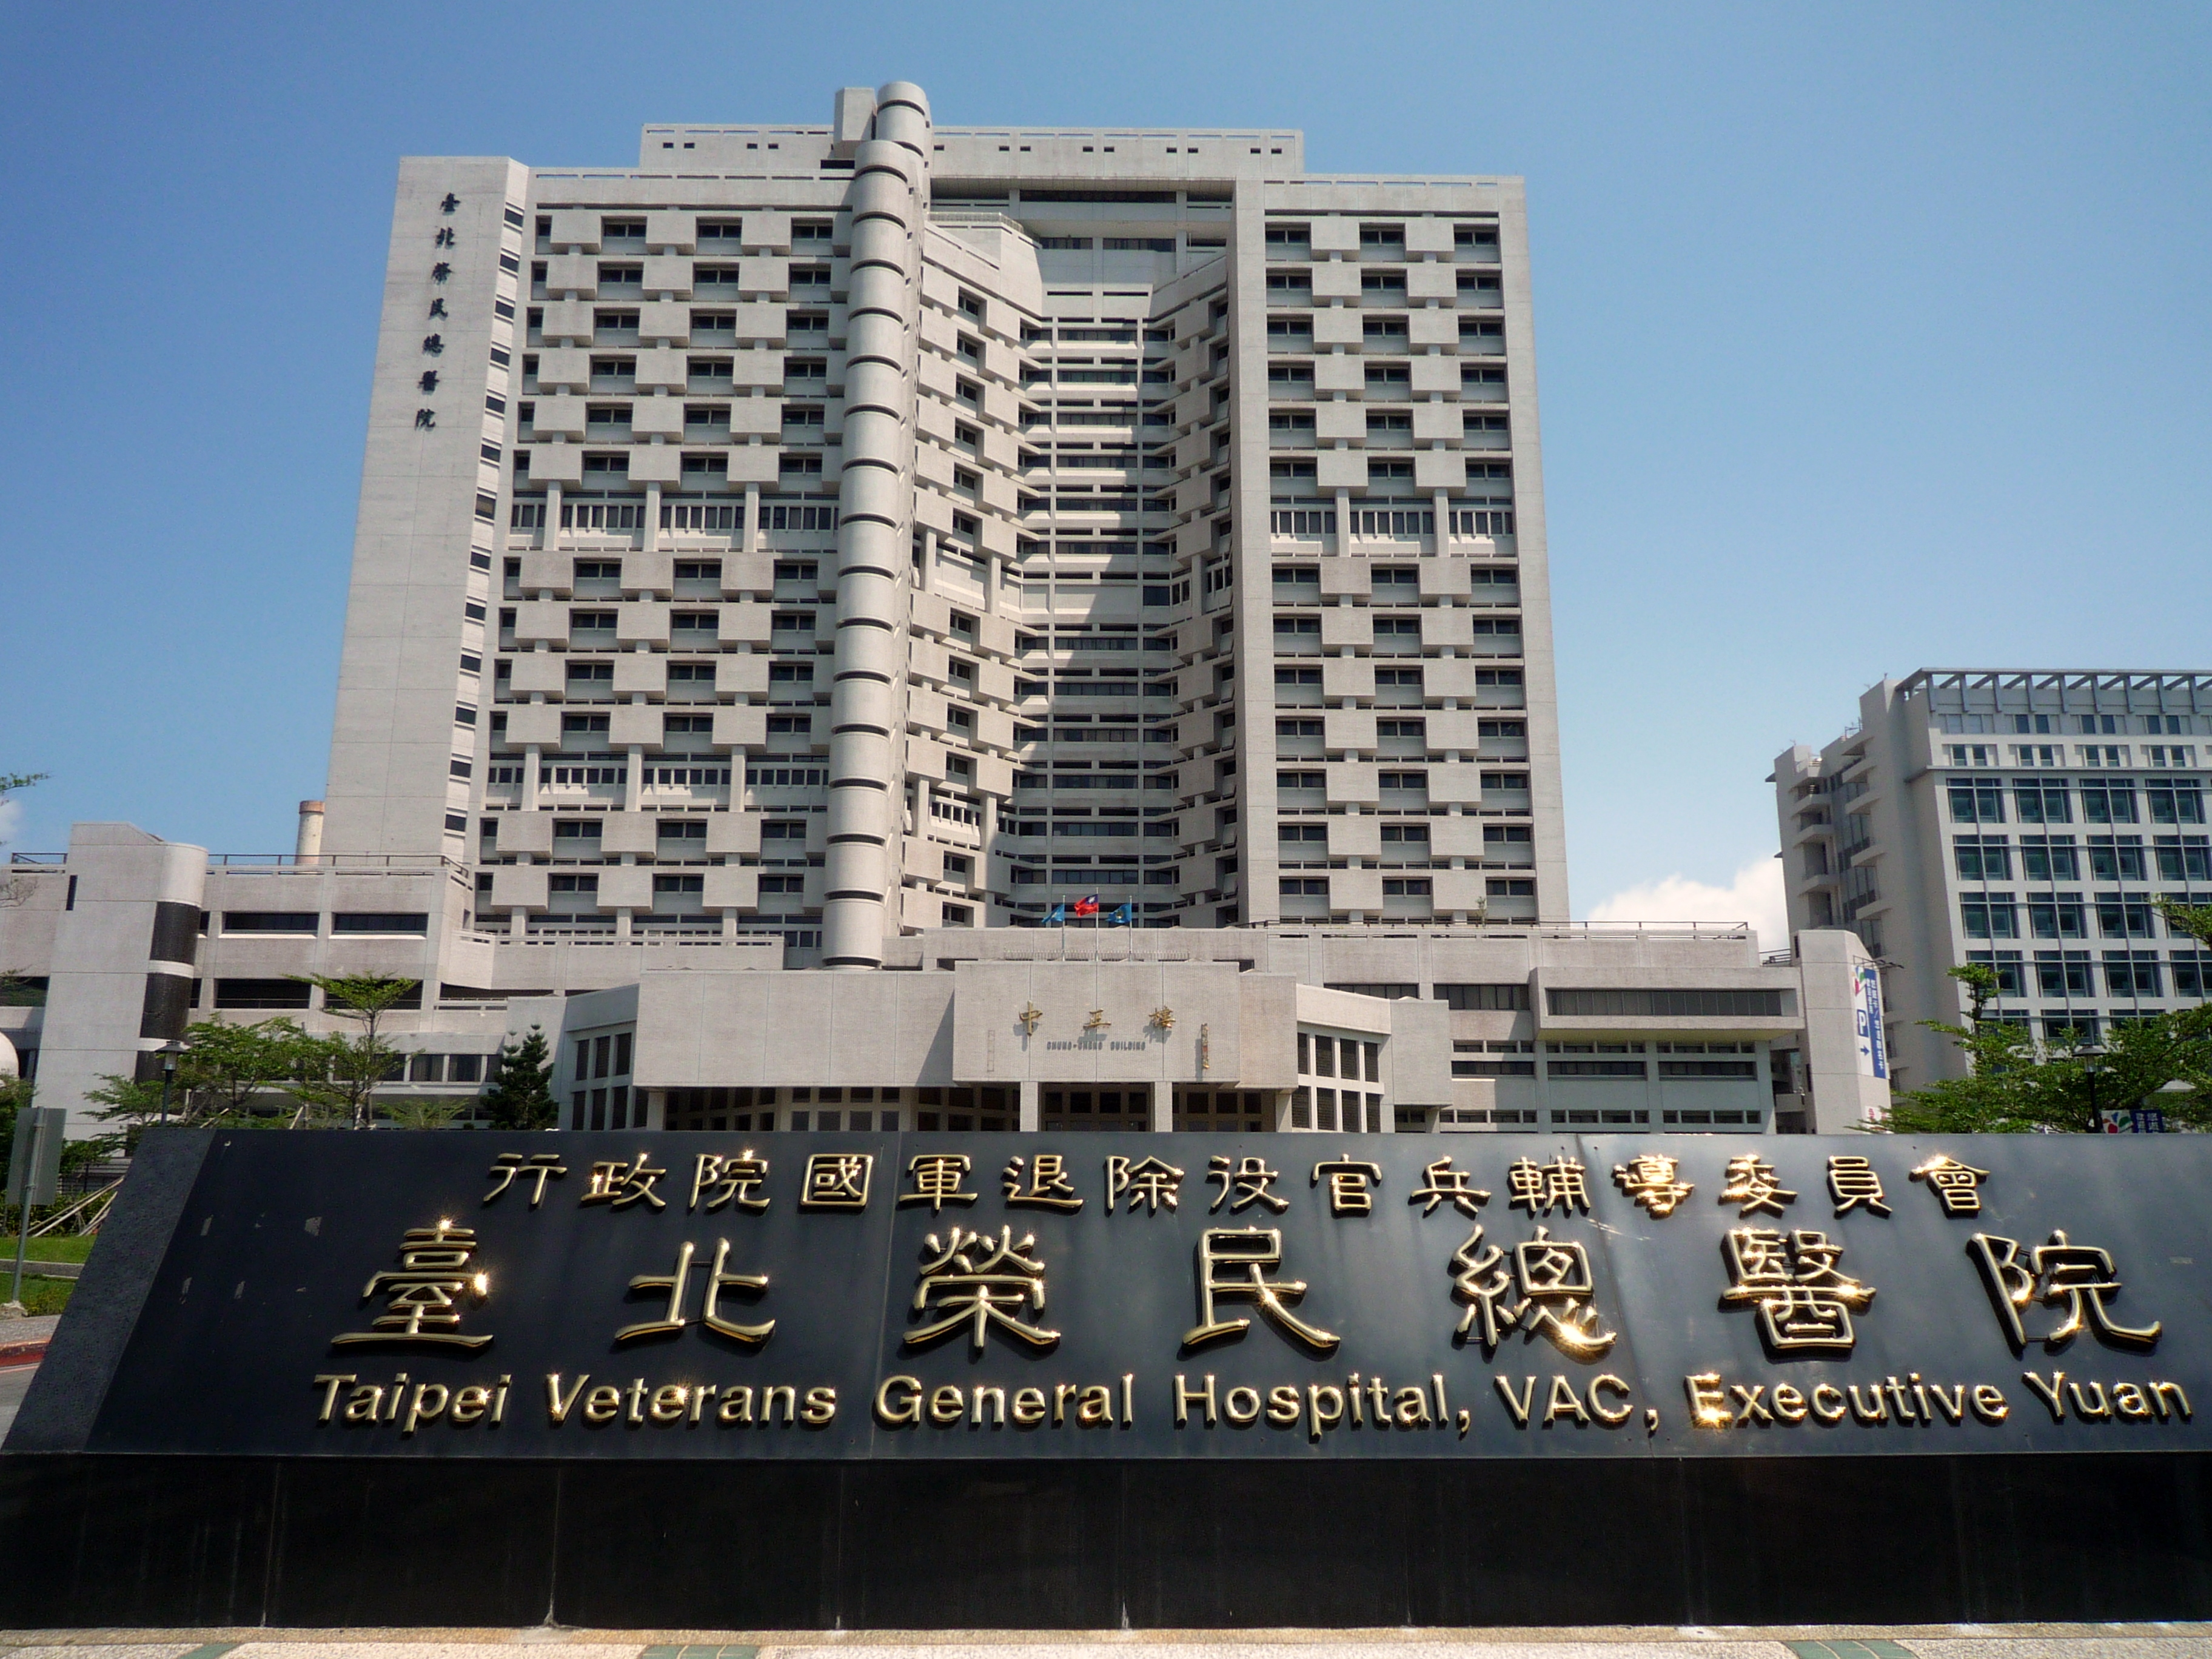 Taipei Veterans General Hospital
��